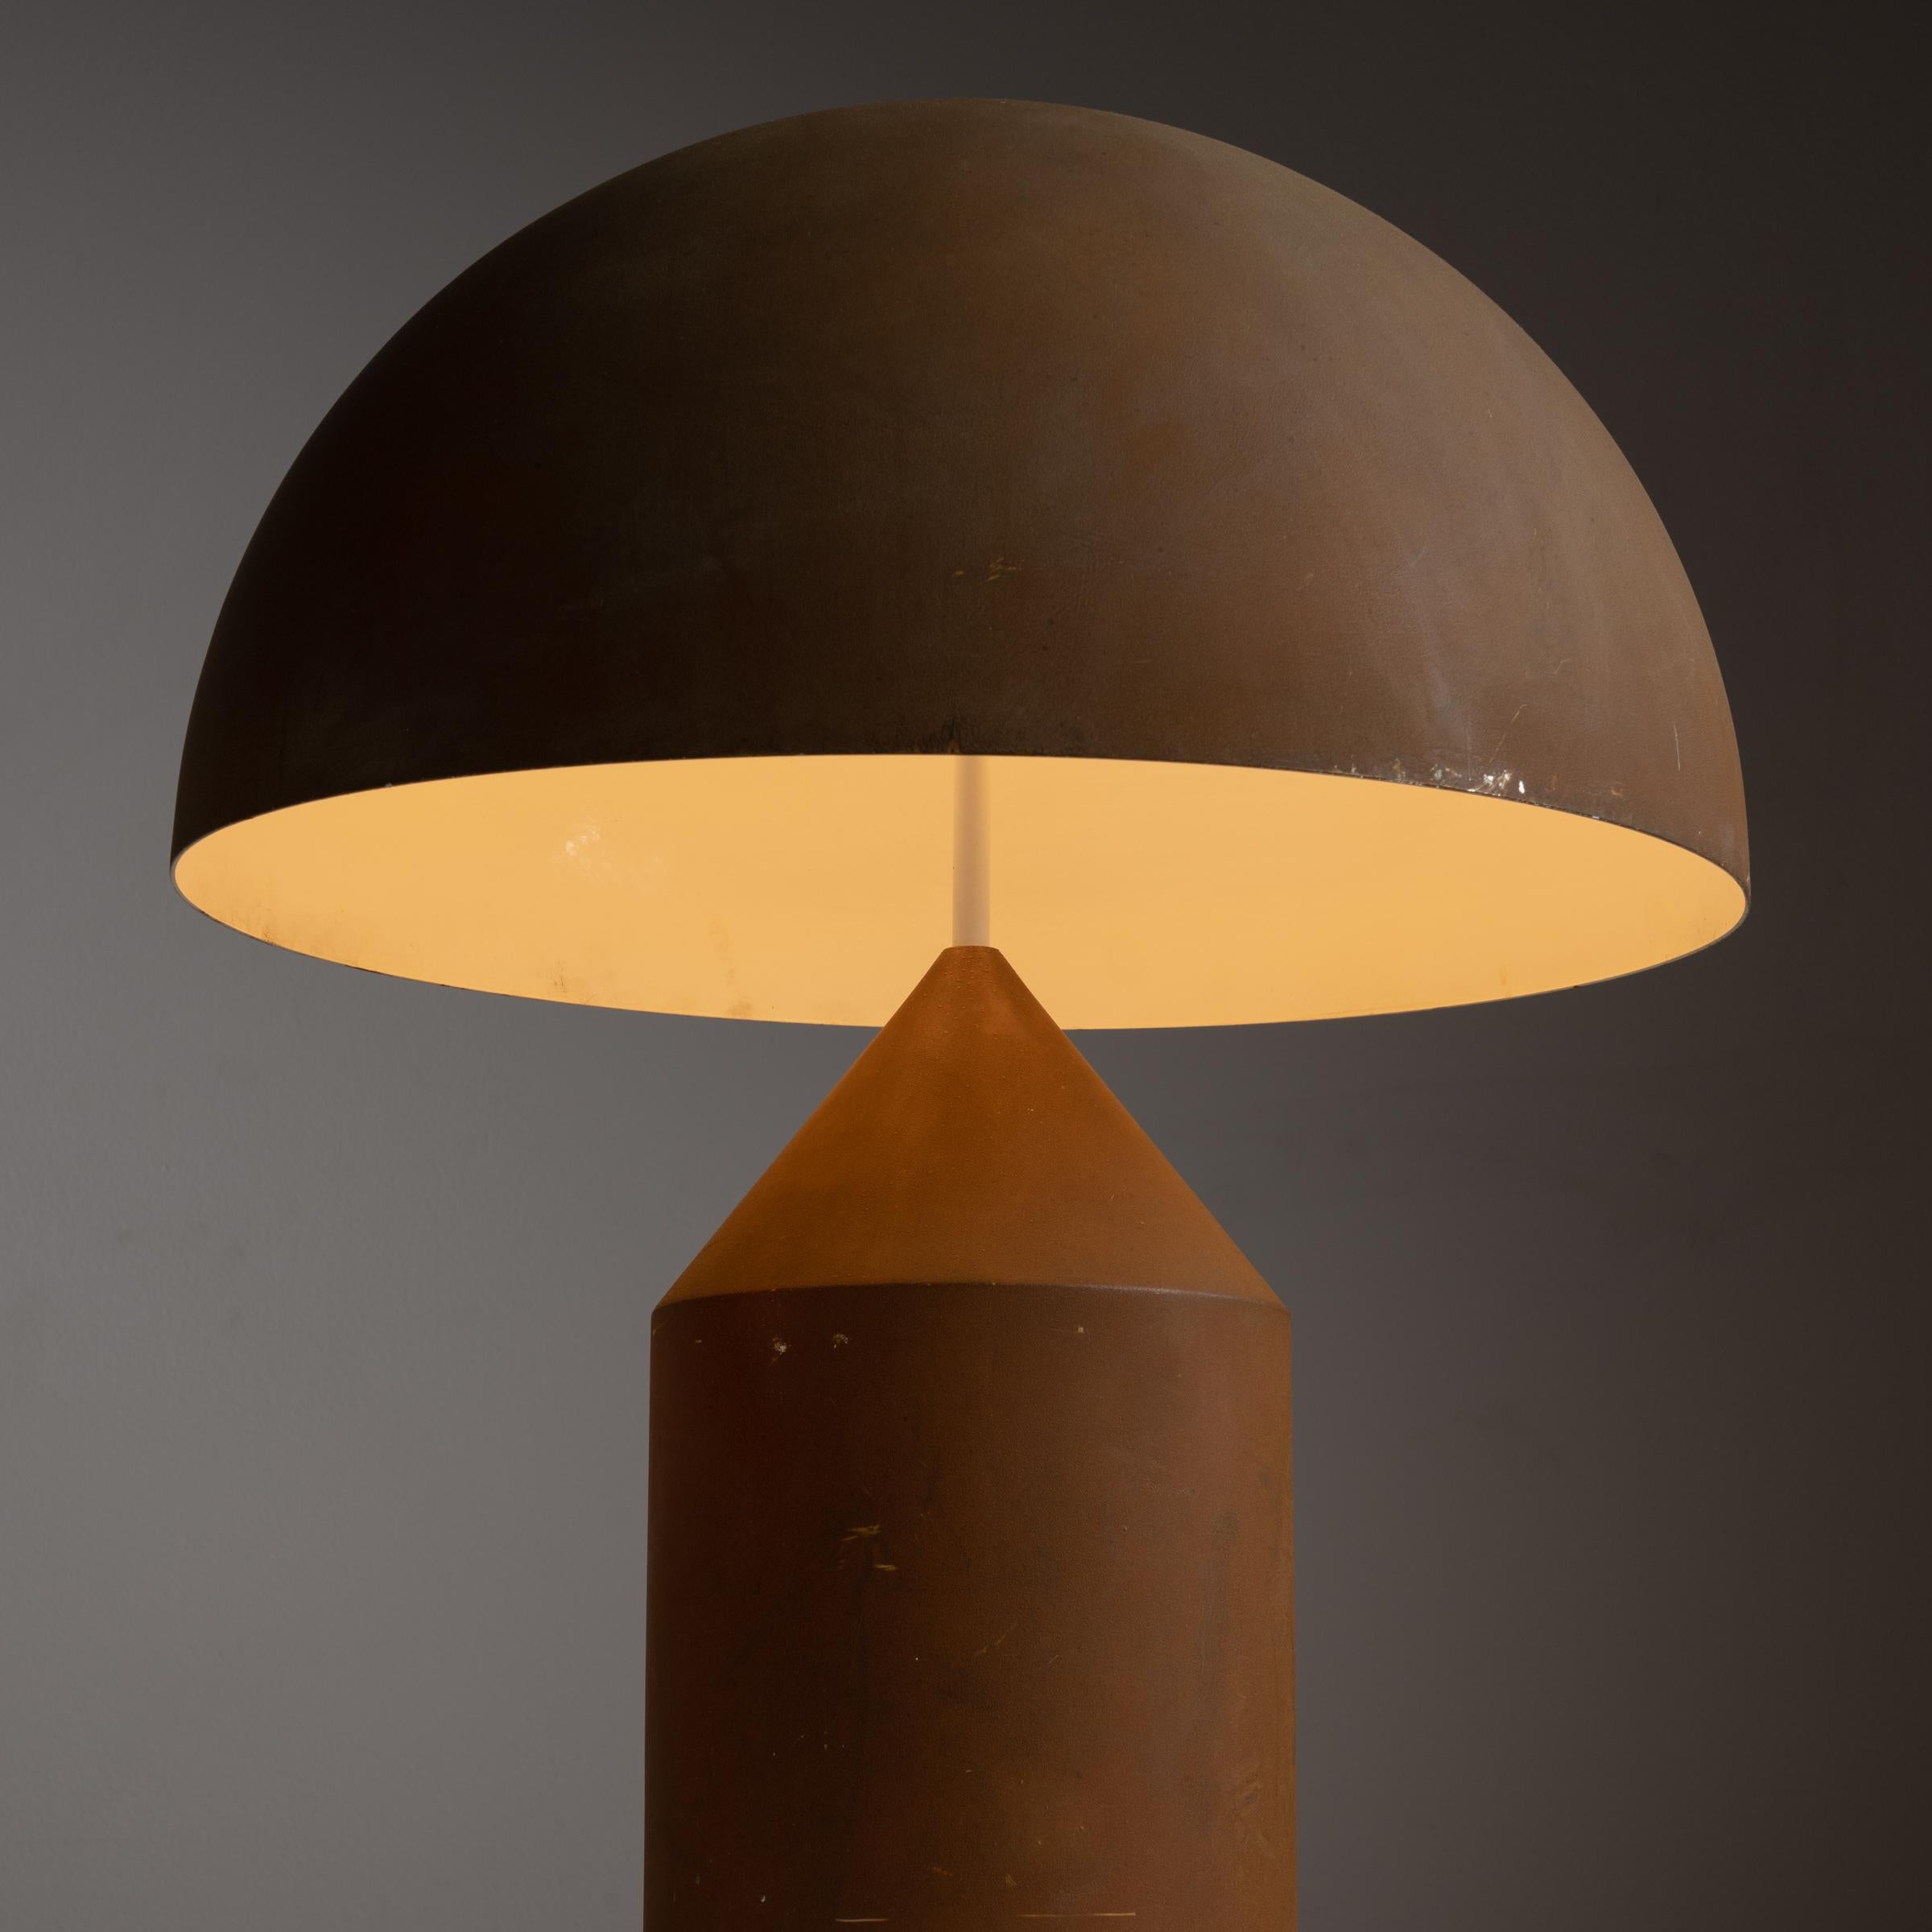 Italian Atollo 239 Table Lamp by Vico Magistretti for Oluce